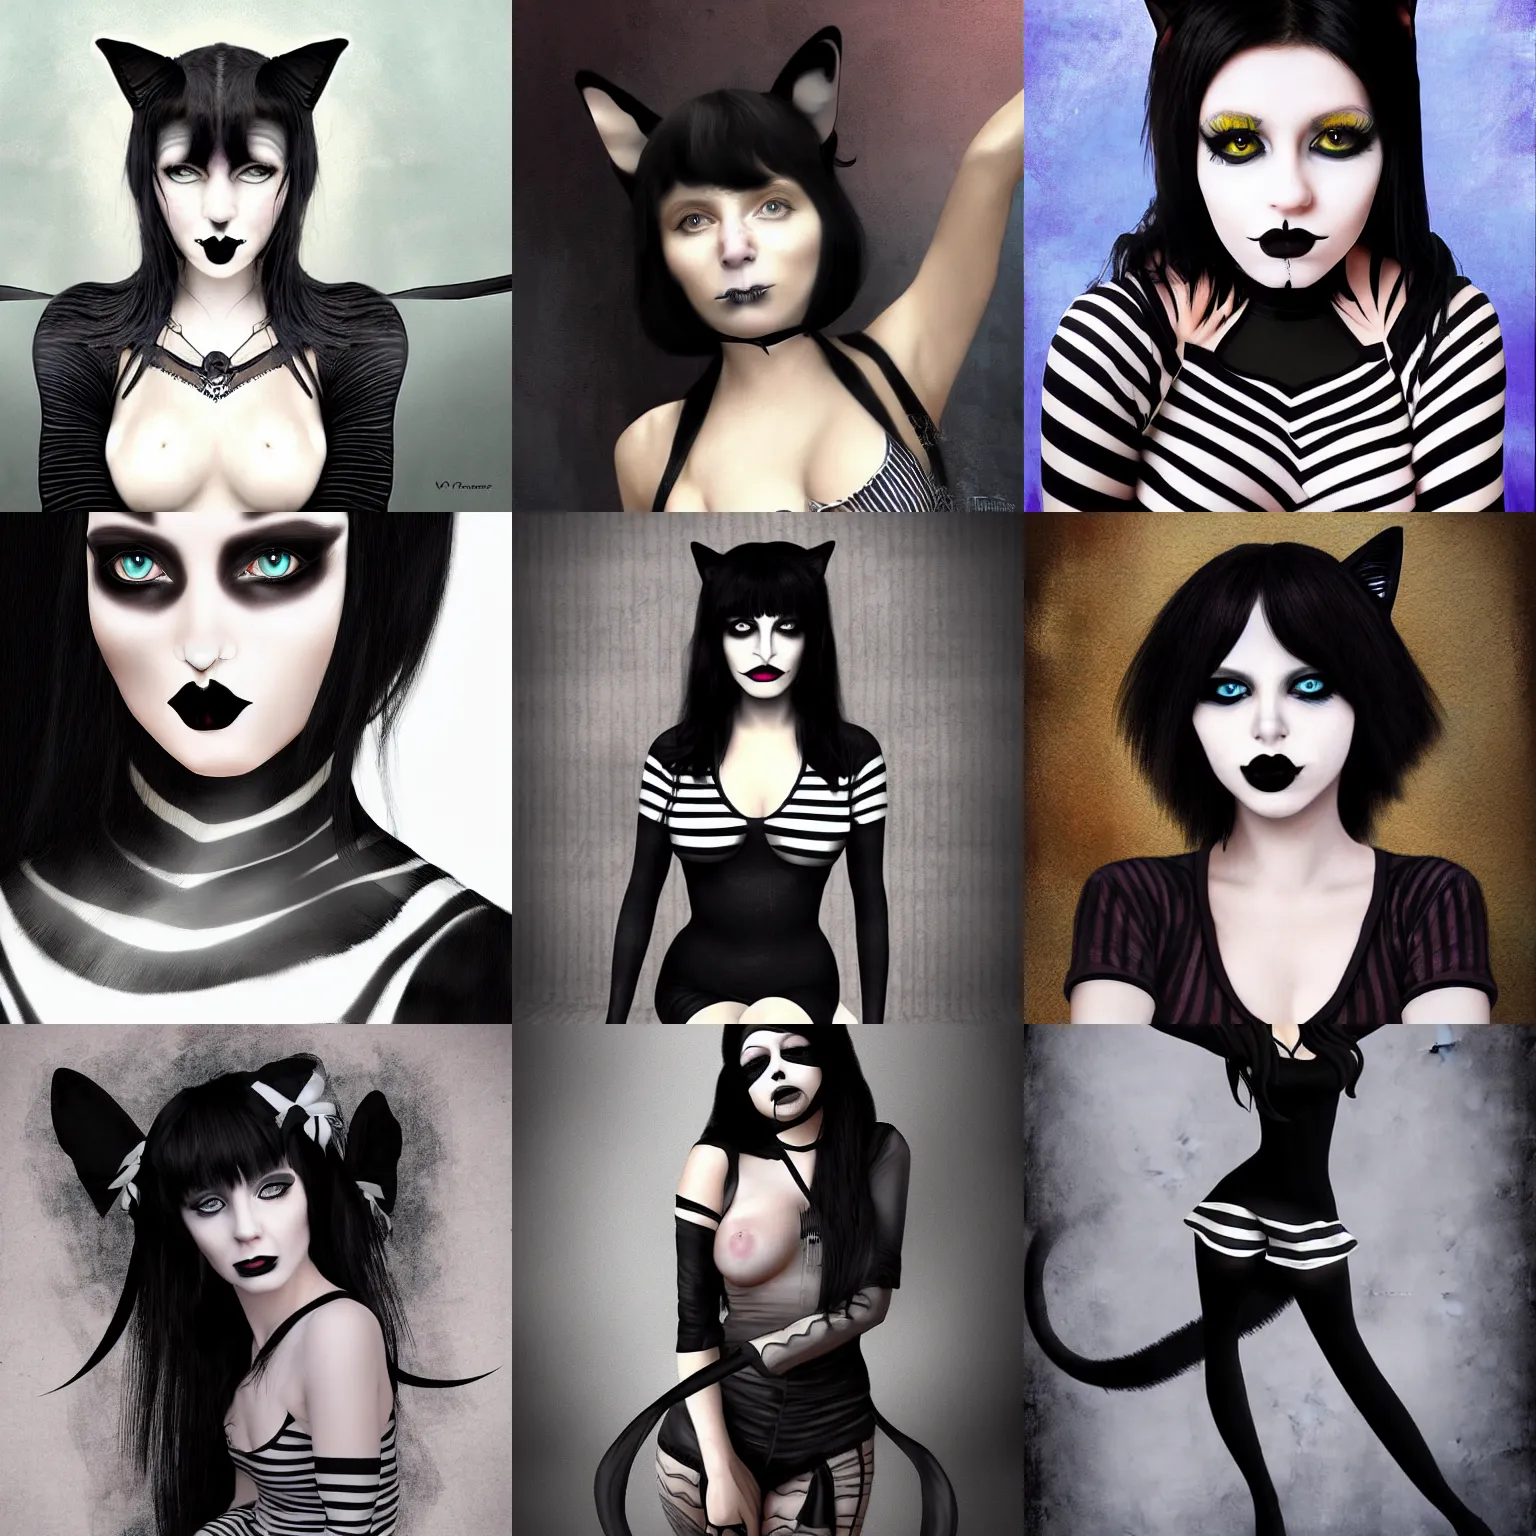 Prompt: portrait of a goth catgirl, black t - shirt, striped pantyhose, digital art, matte painting by victoria frances